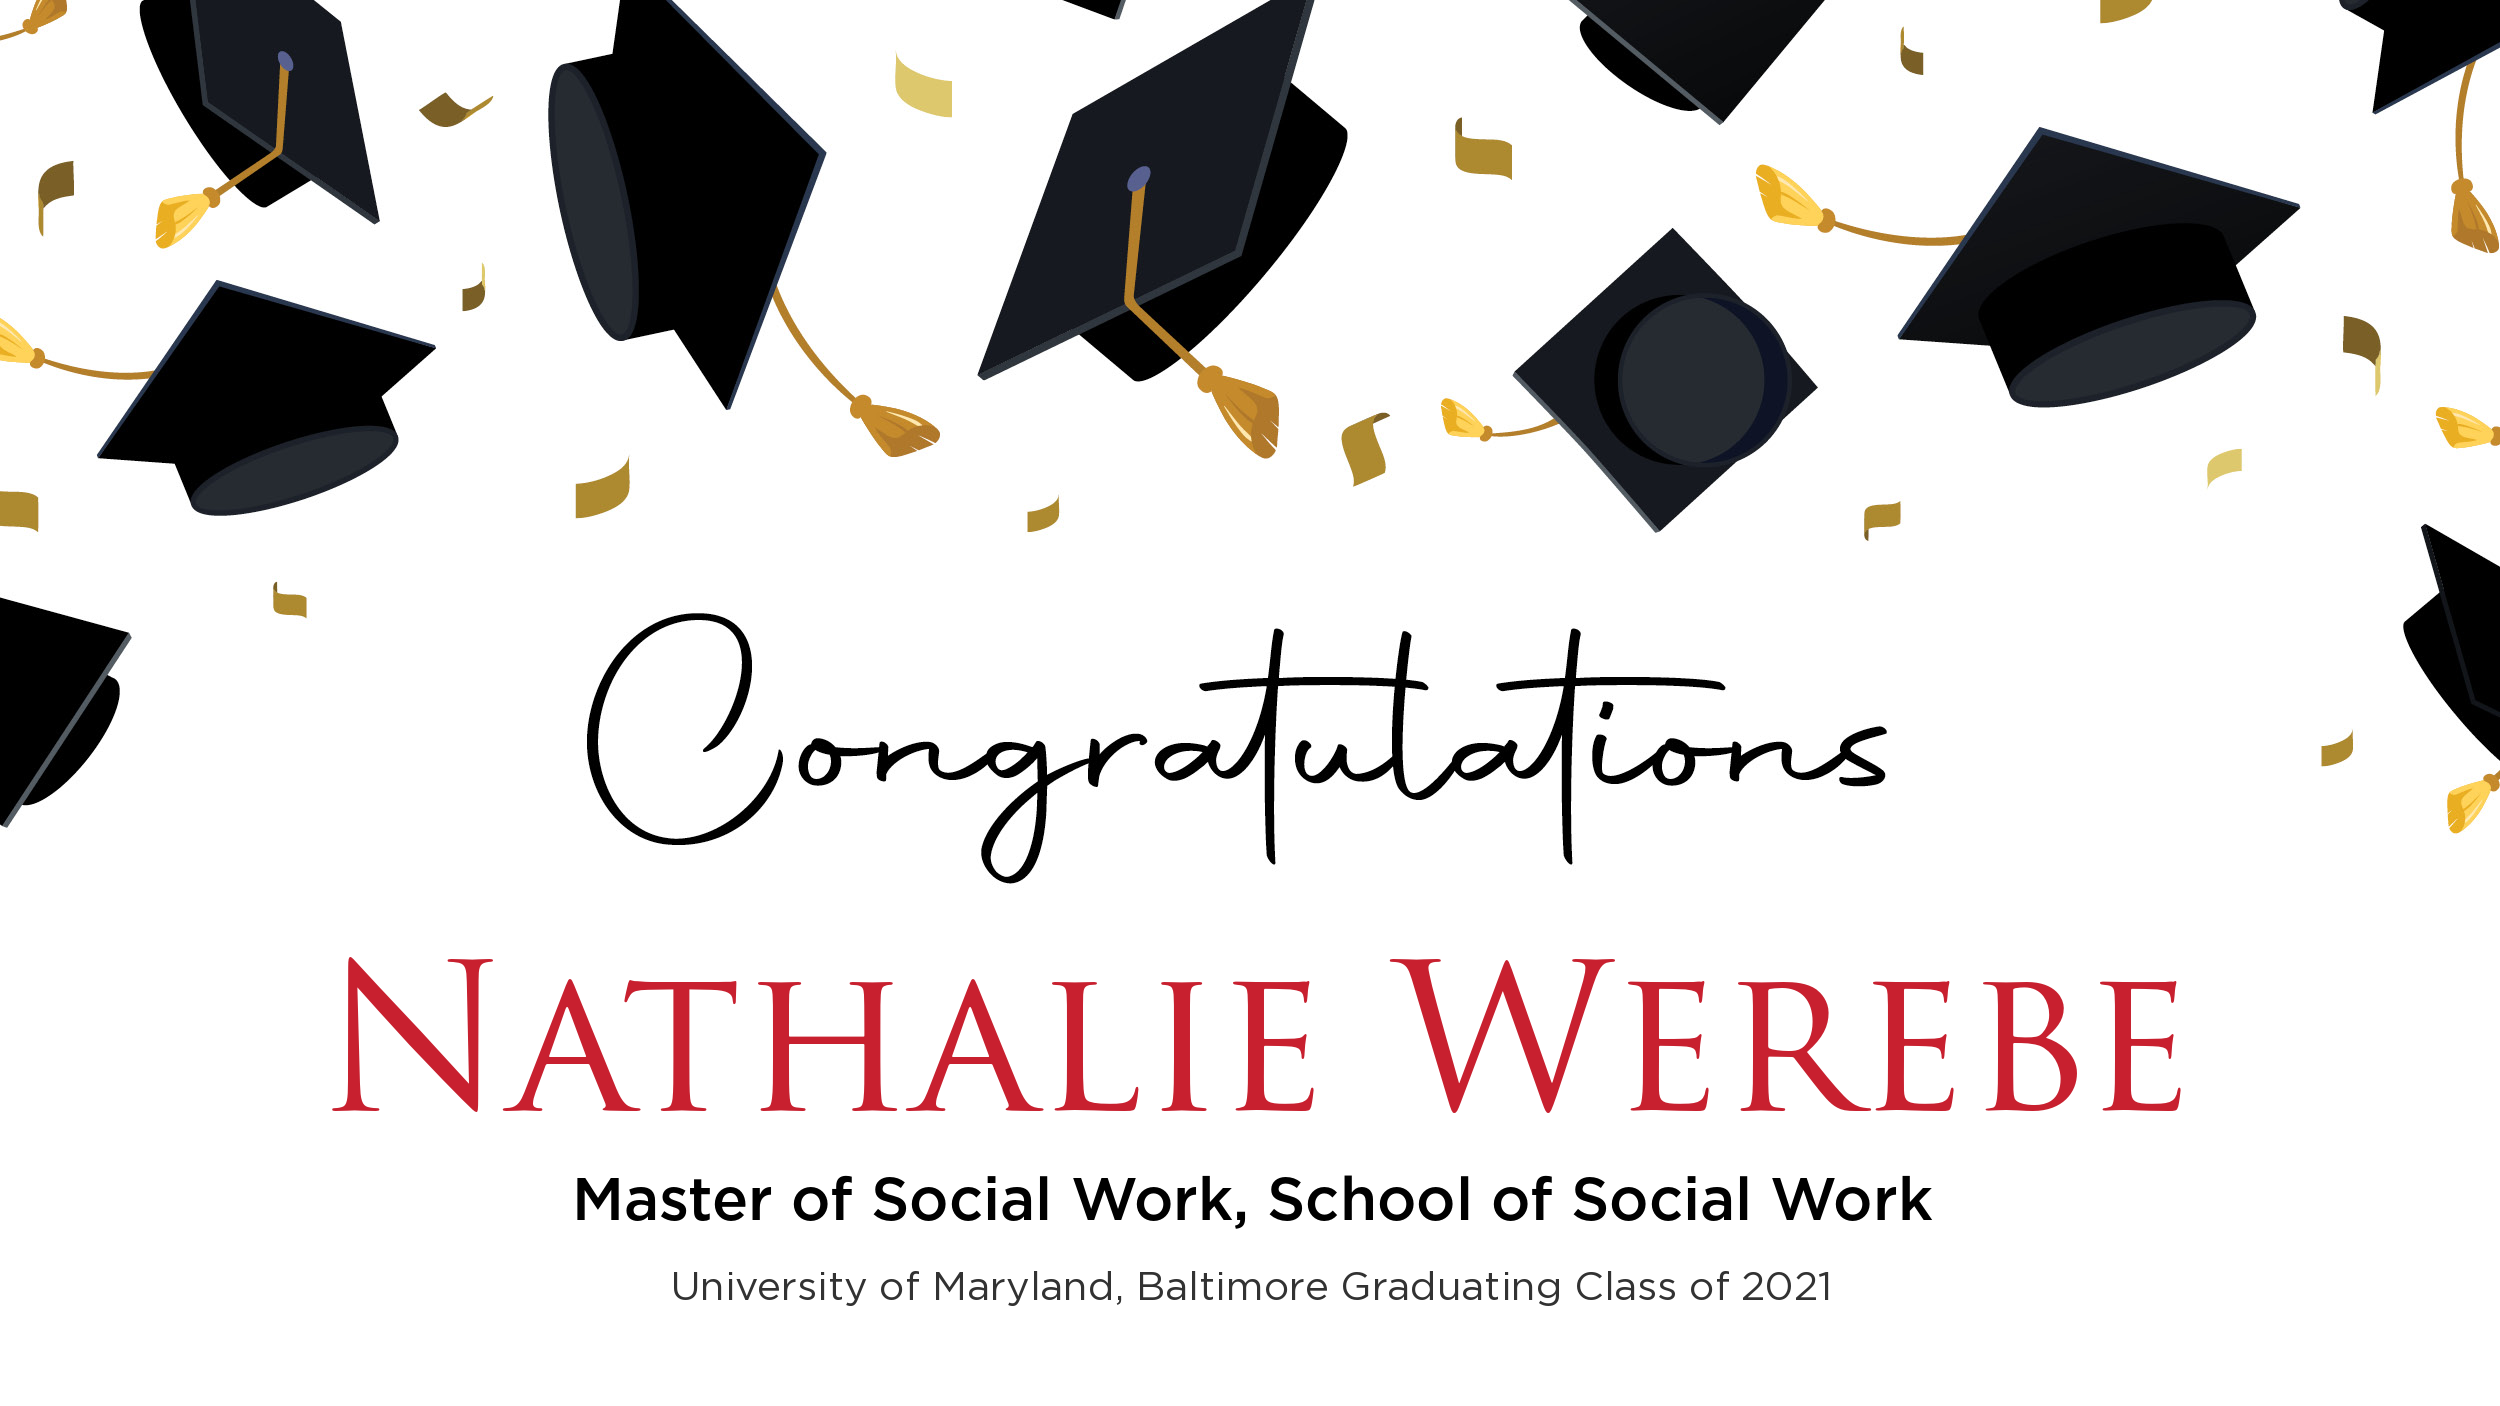 Congratulations Nathalie Werebe, Master of Social Work